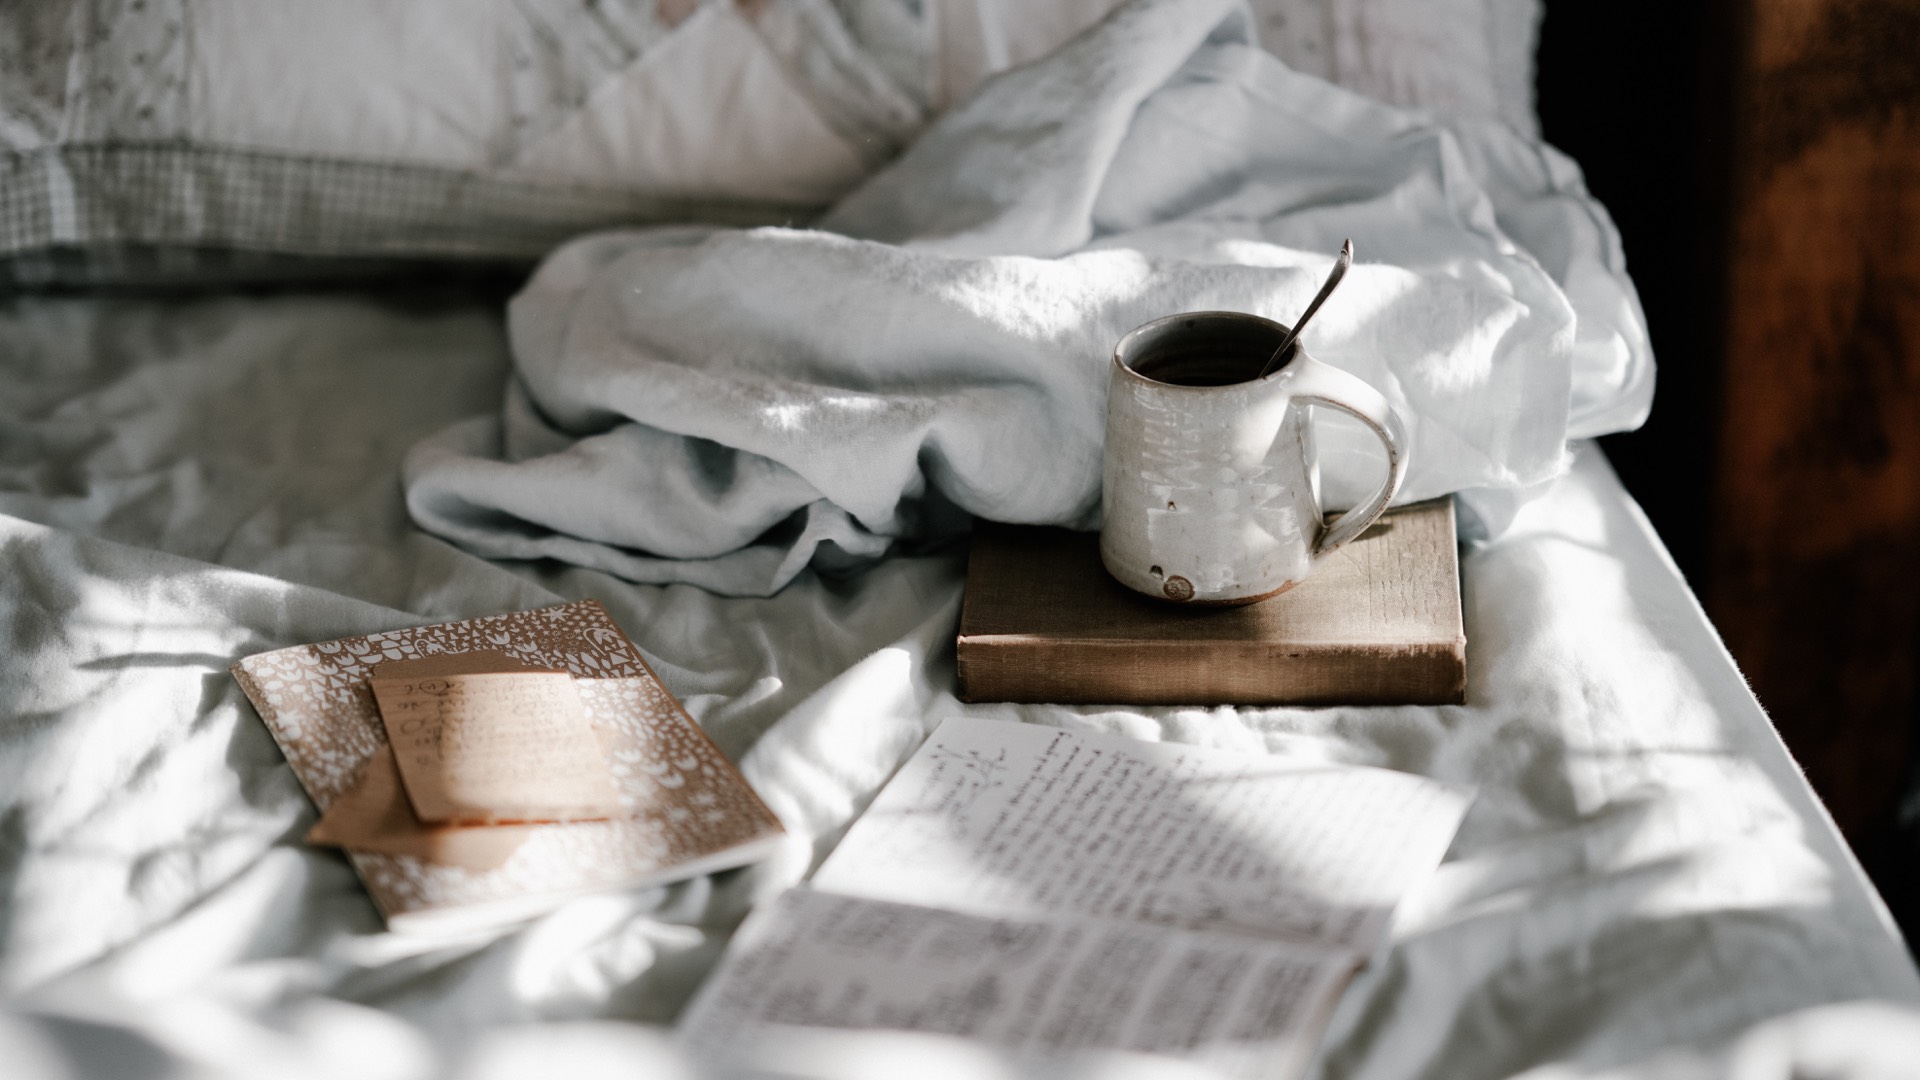 Journal and mug on a bed